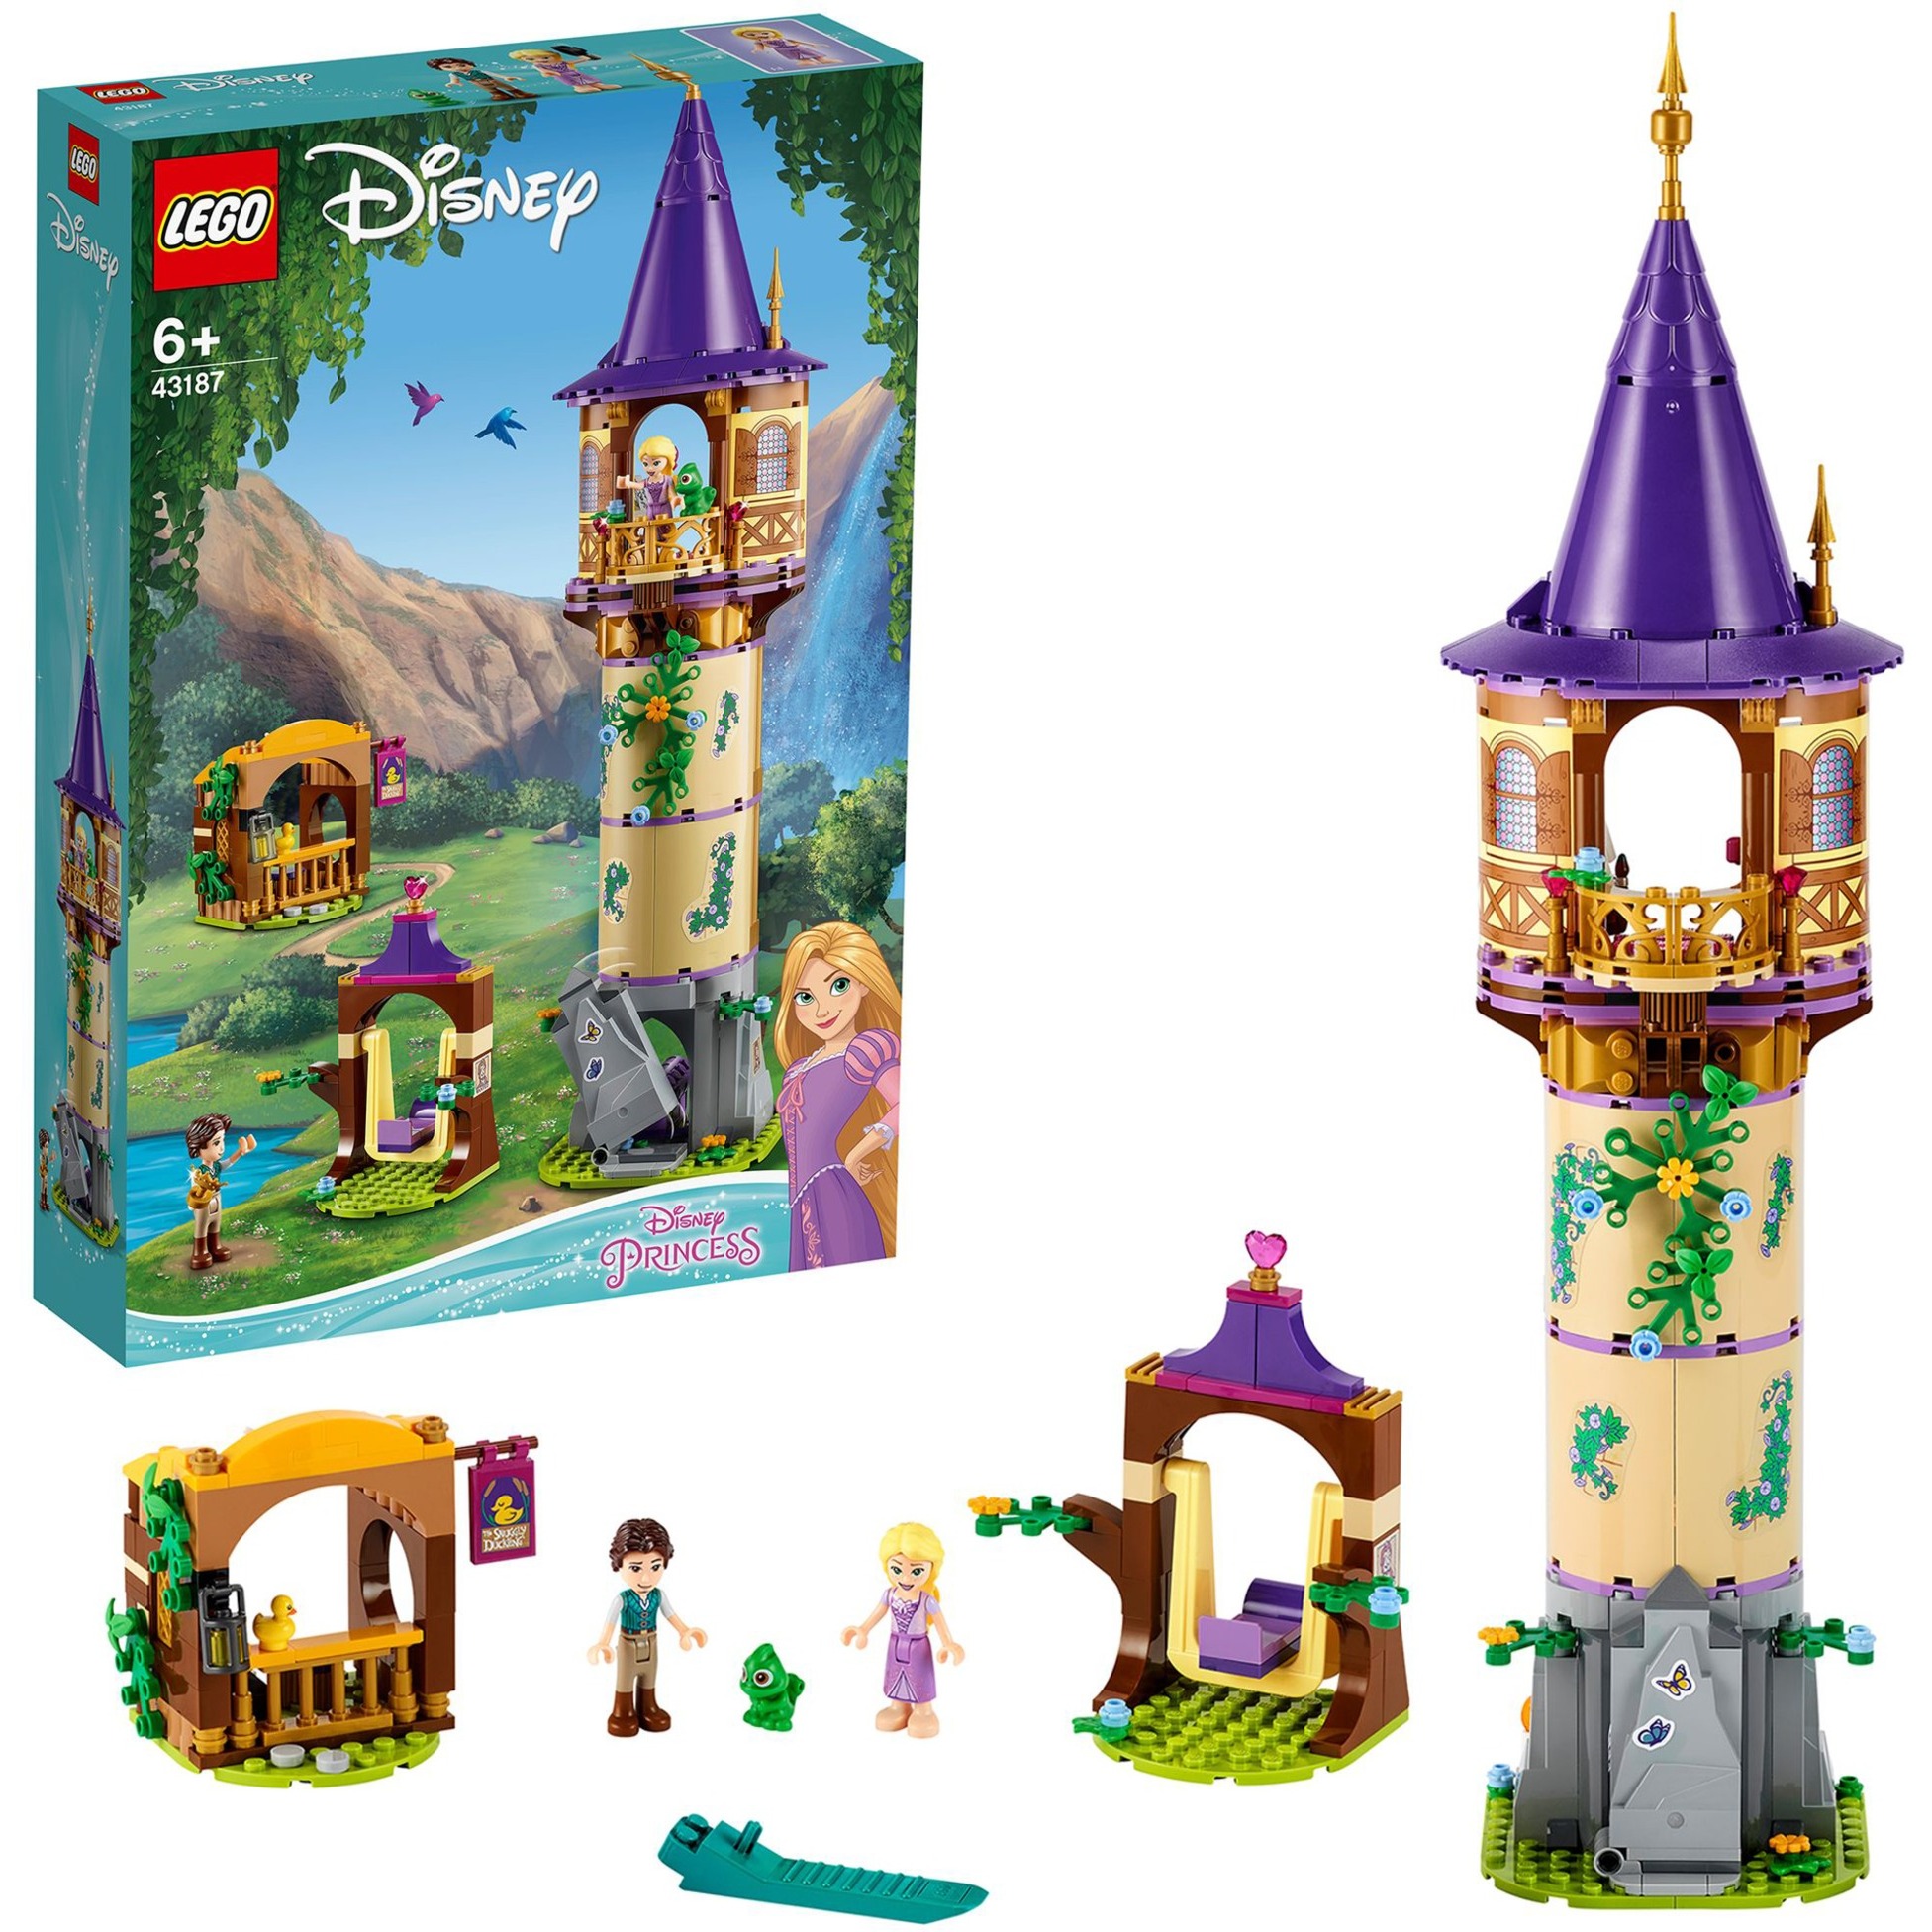 Spielzeug: Lego 43187 Disney Princess Rapunzels Turm